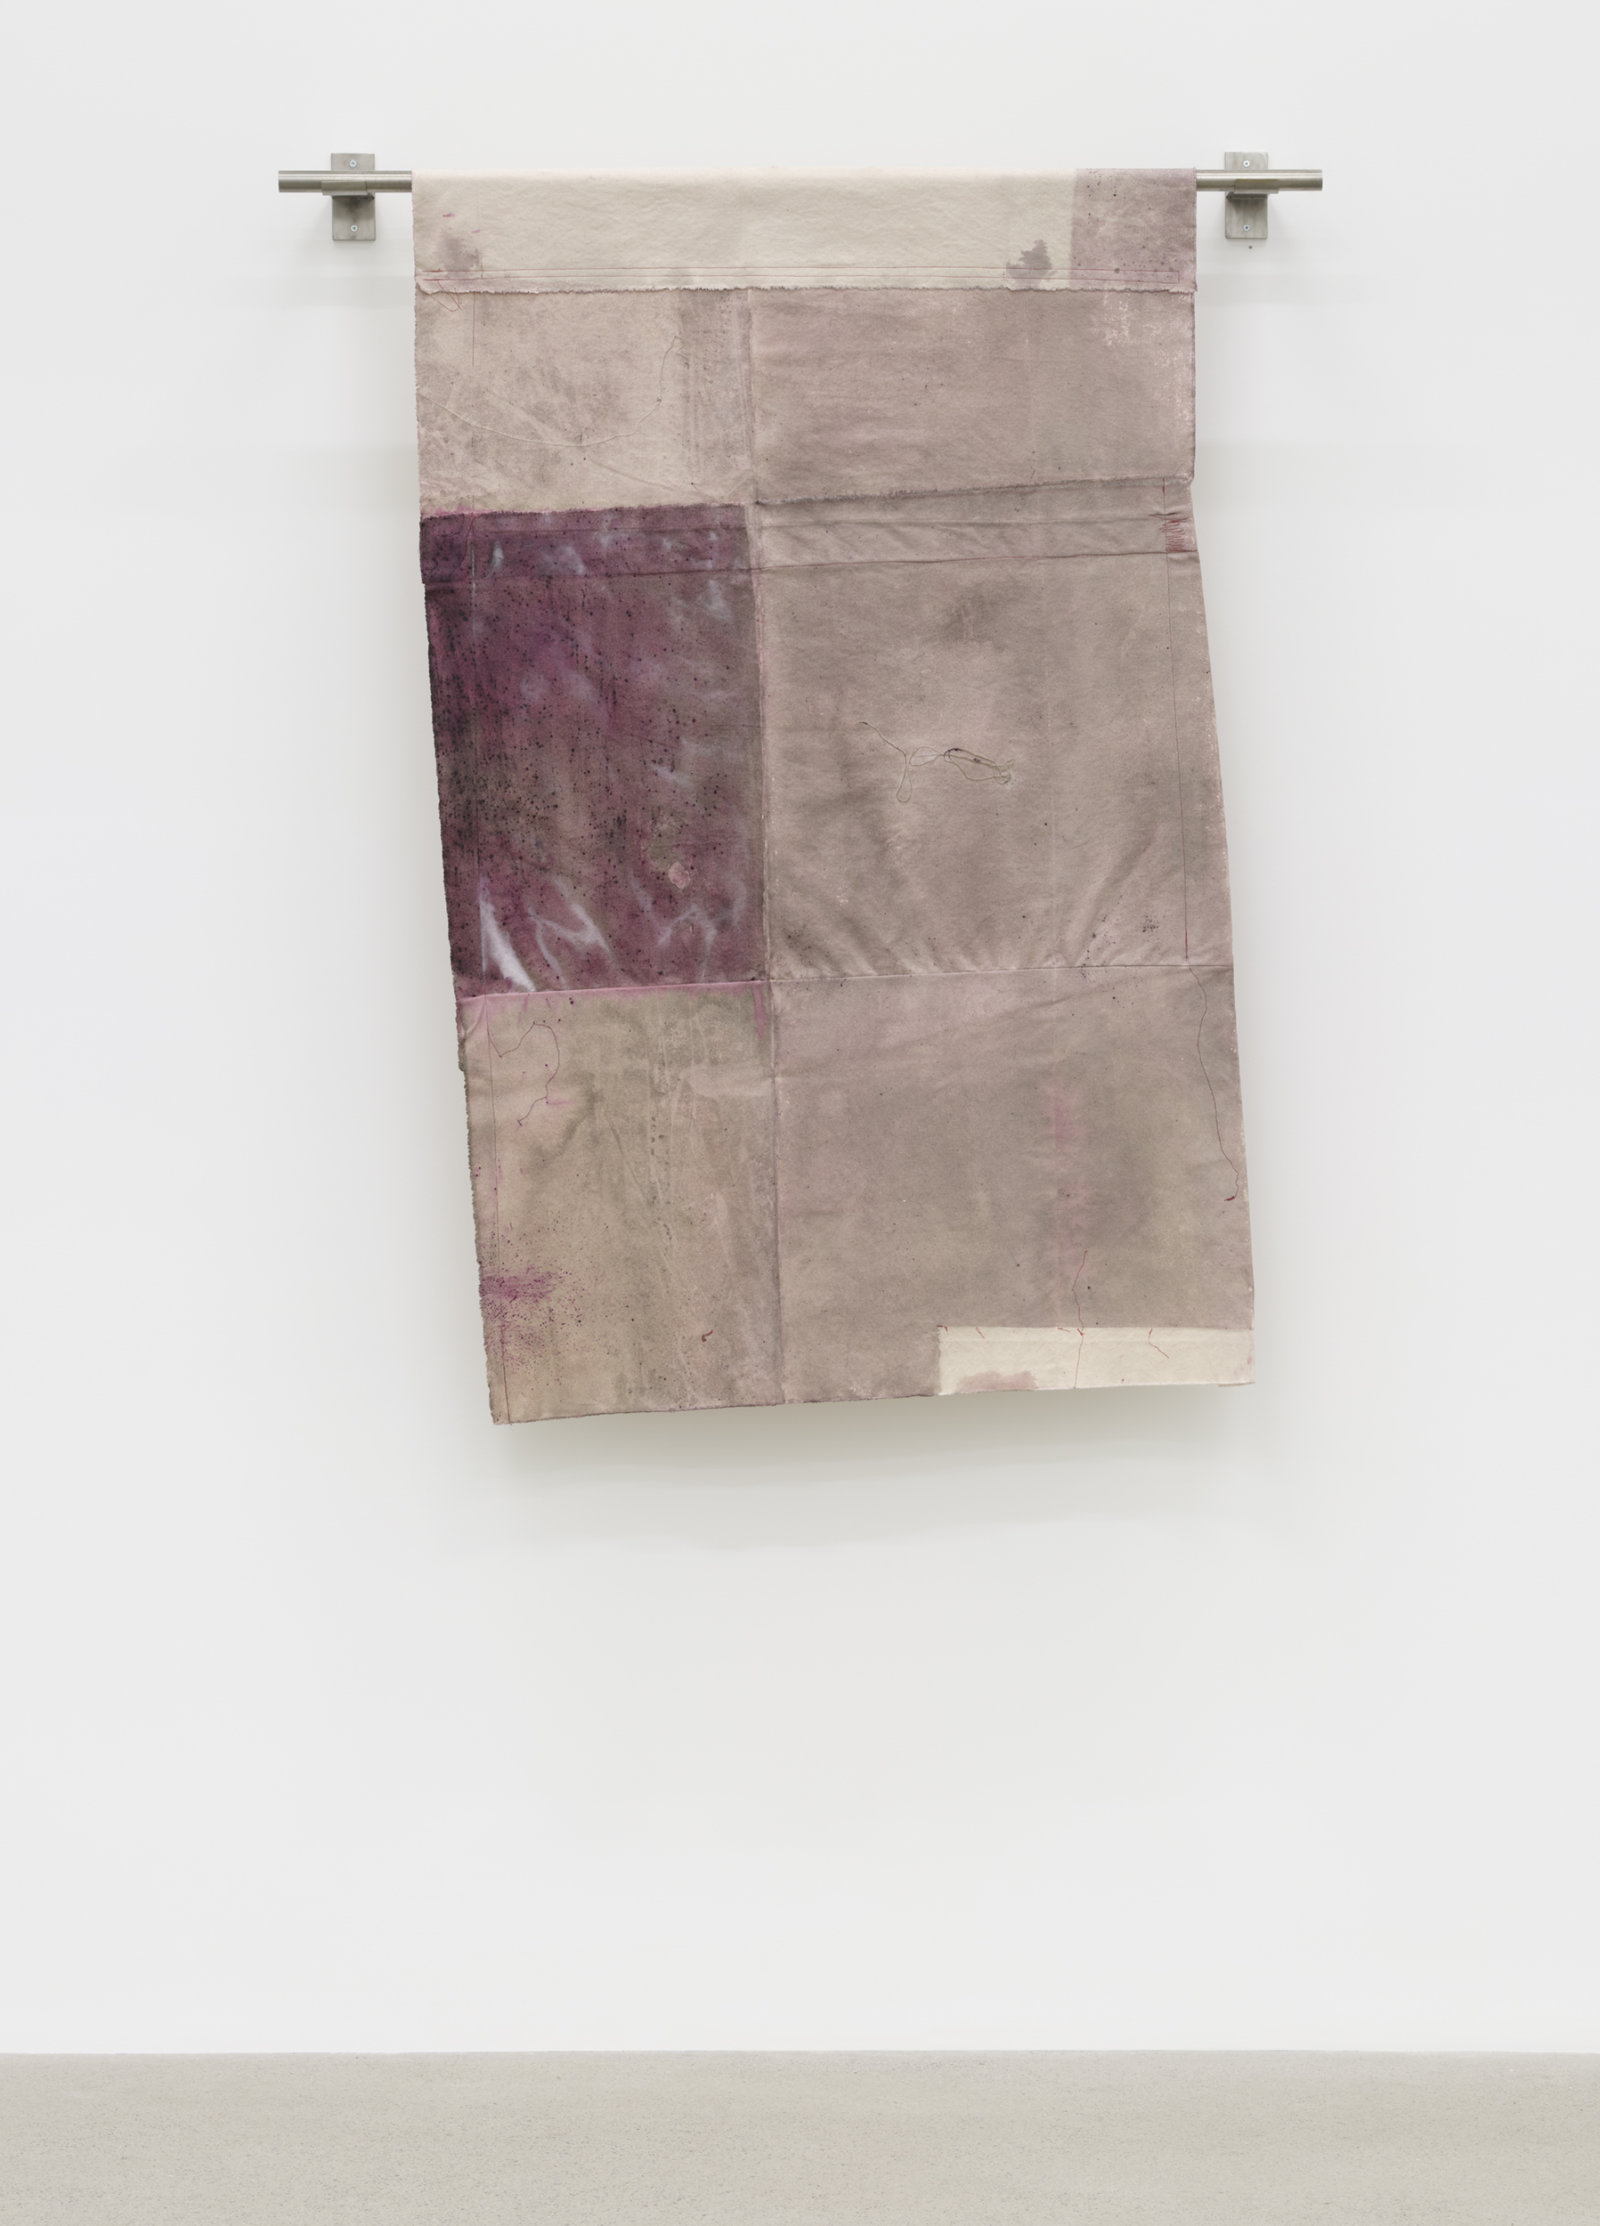 Duane Linklater, mocassin melancholia, 2022, canvas, thread, cochineal, steel, 60 x 48 x 6 in. (151 x 122 x 16 cm)